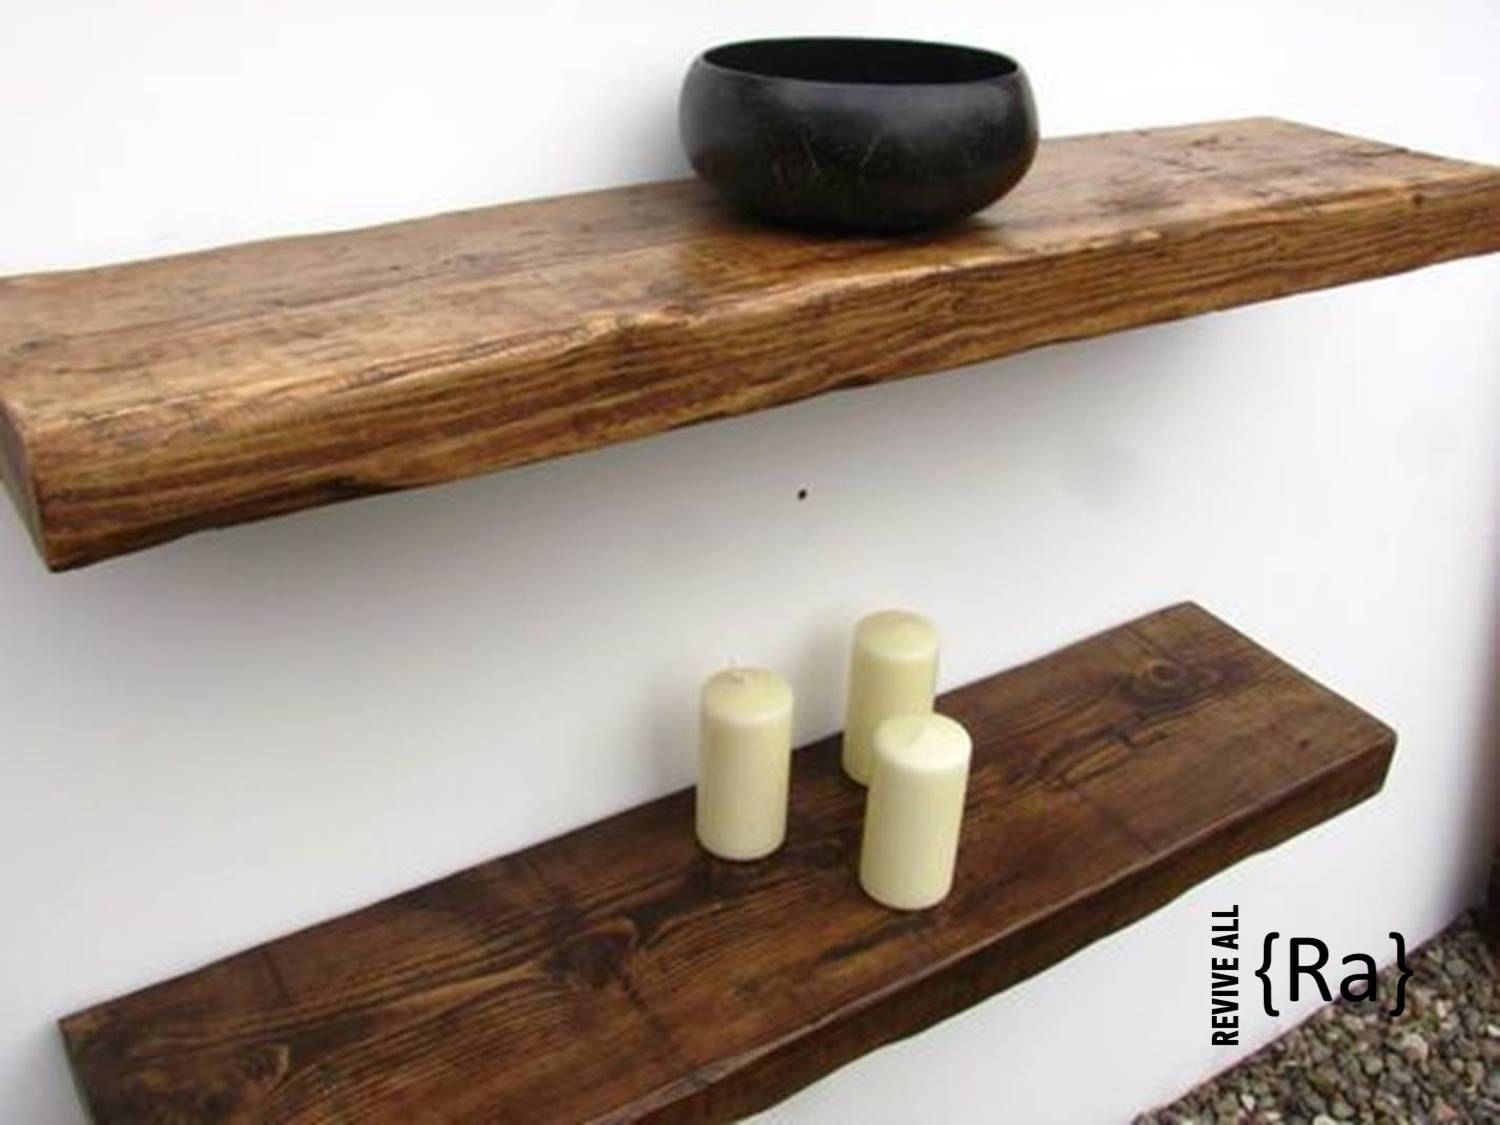 Raw Wood Shelves